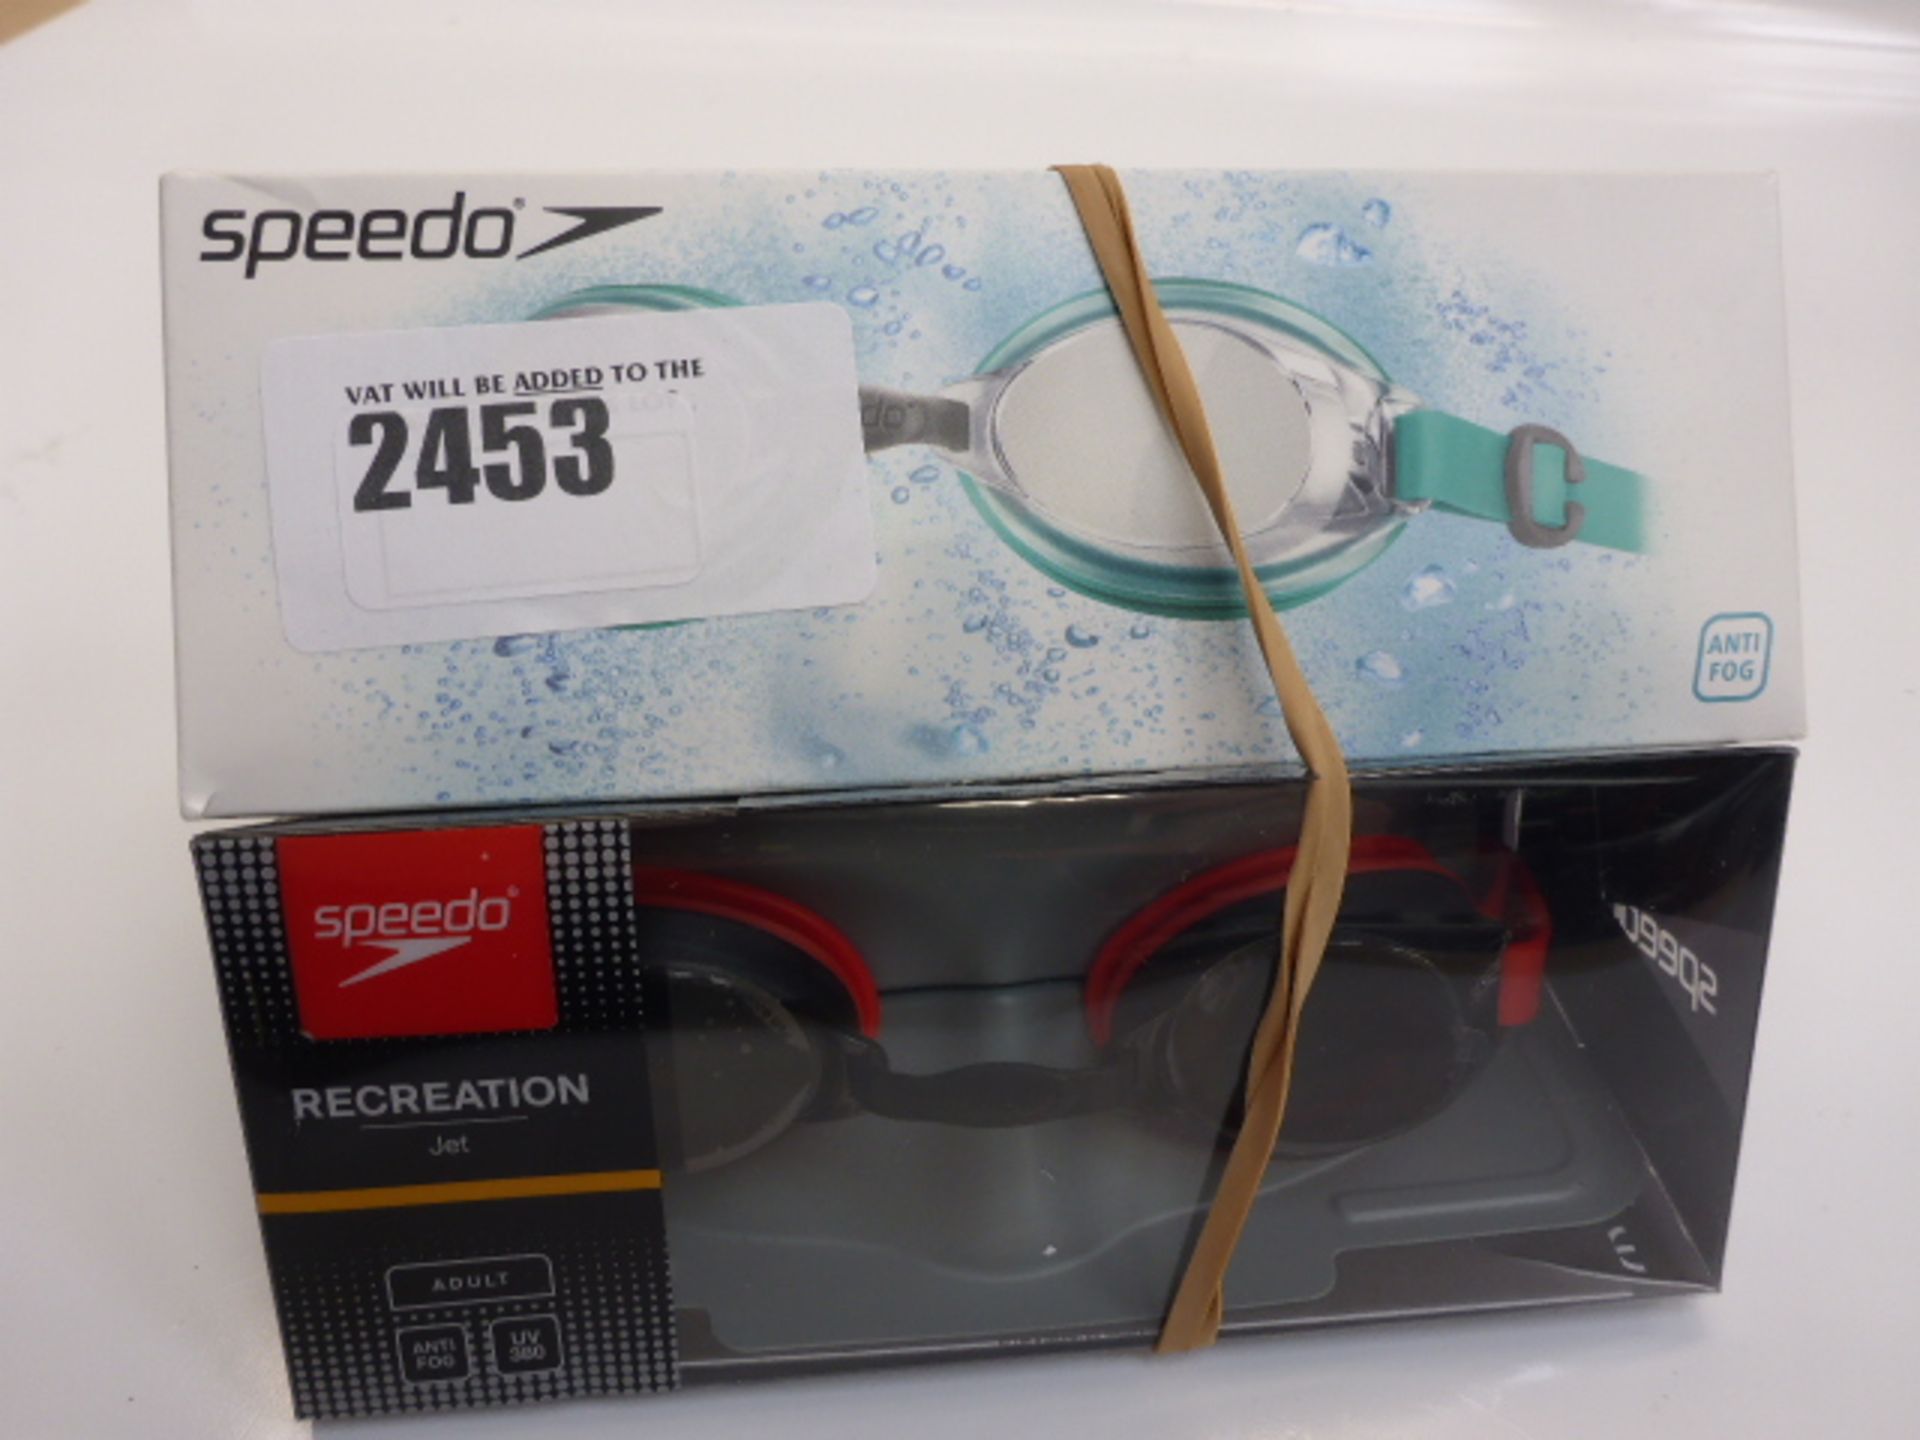 Speed Recreation Jet goggles and Speedo anti-fog goggles